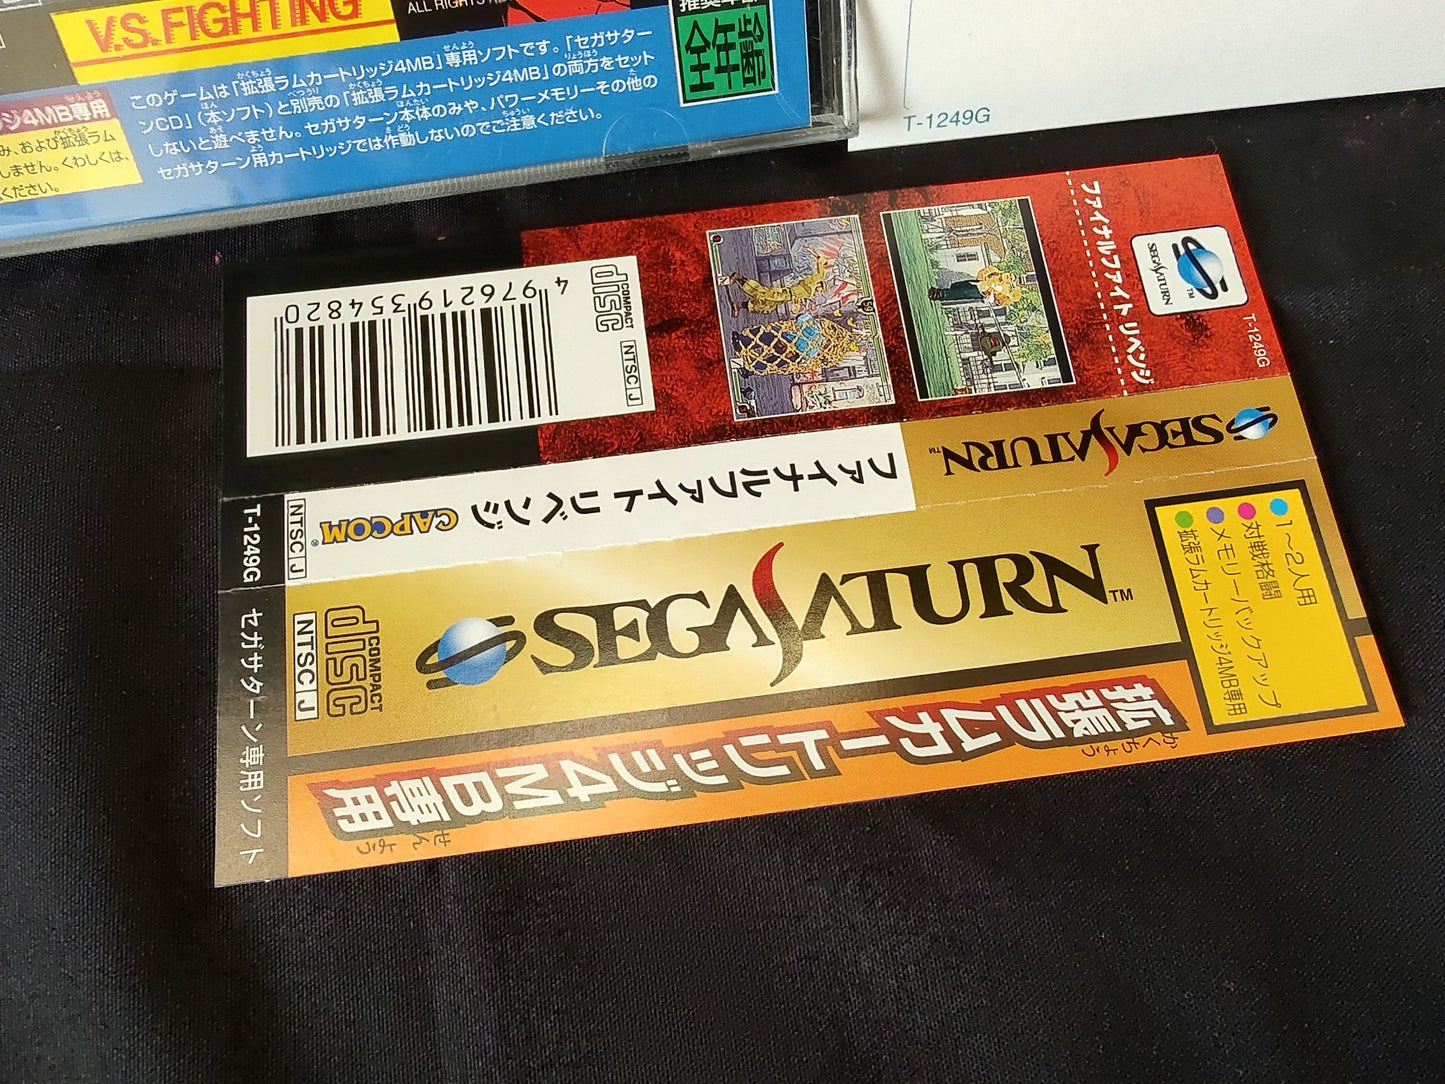 Final Fight Revenge SEGA Saturn Game w/Spine and Reg Card,Manual,Boxed set-f1116